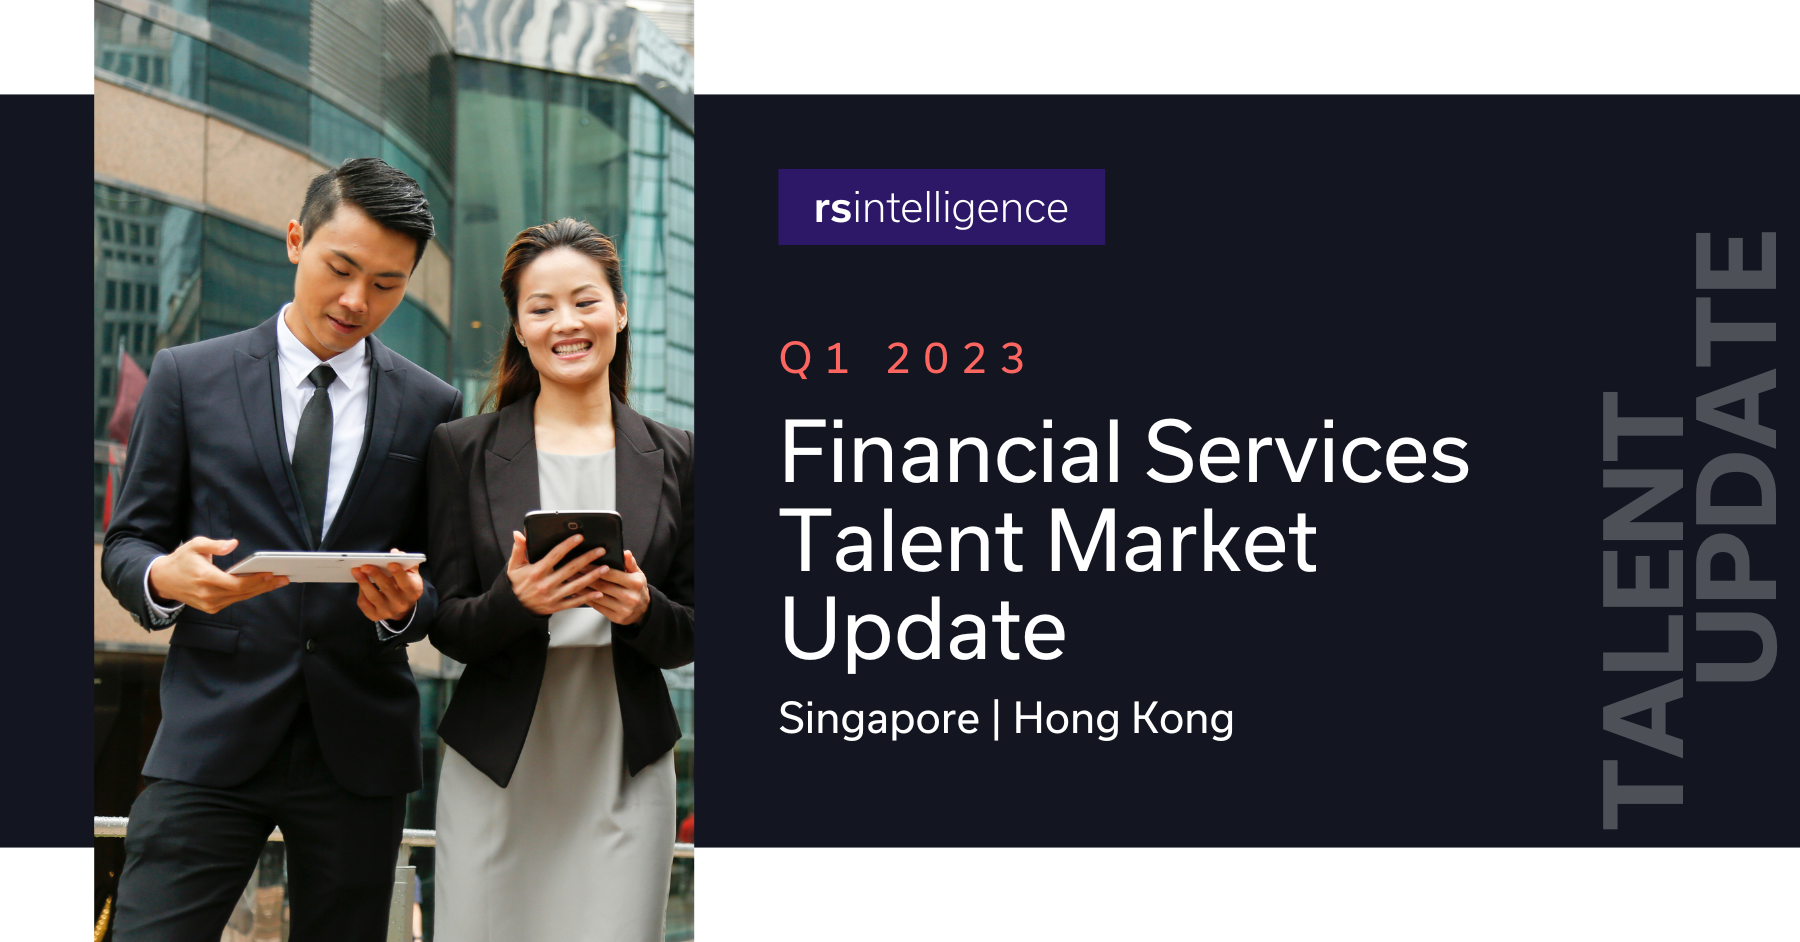 Financial Services Talent Market Update Q1 2023